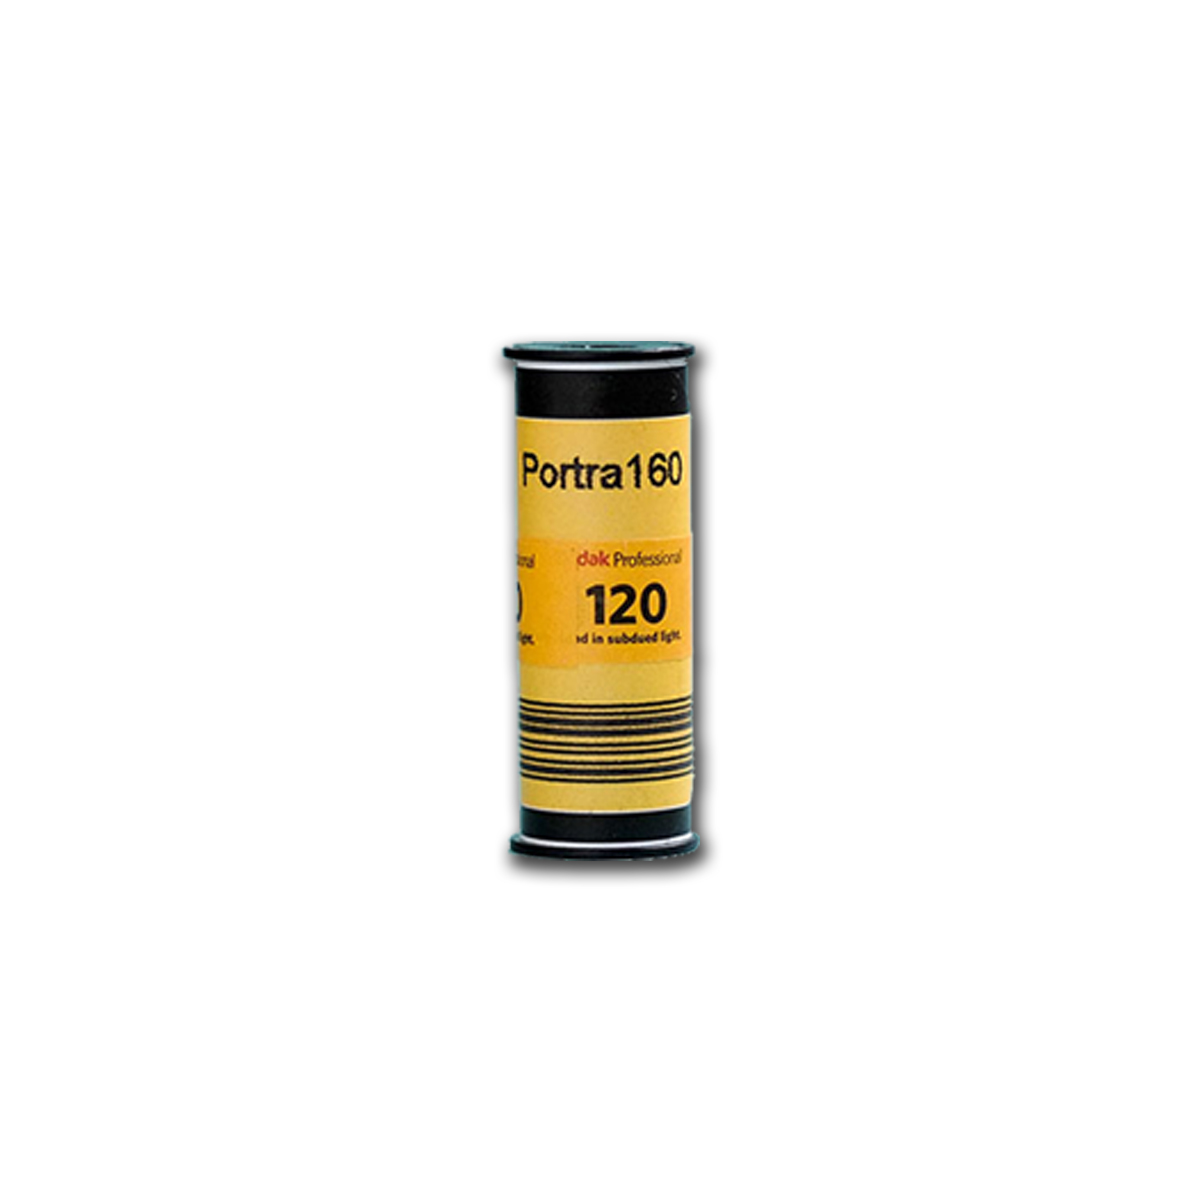 Kodak, New Portra 120 film - Disposable Camera Company